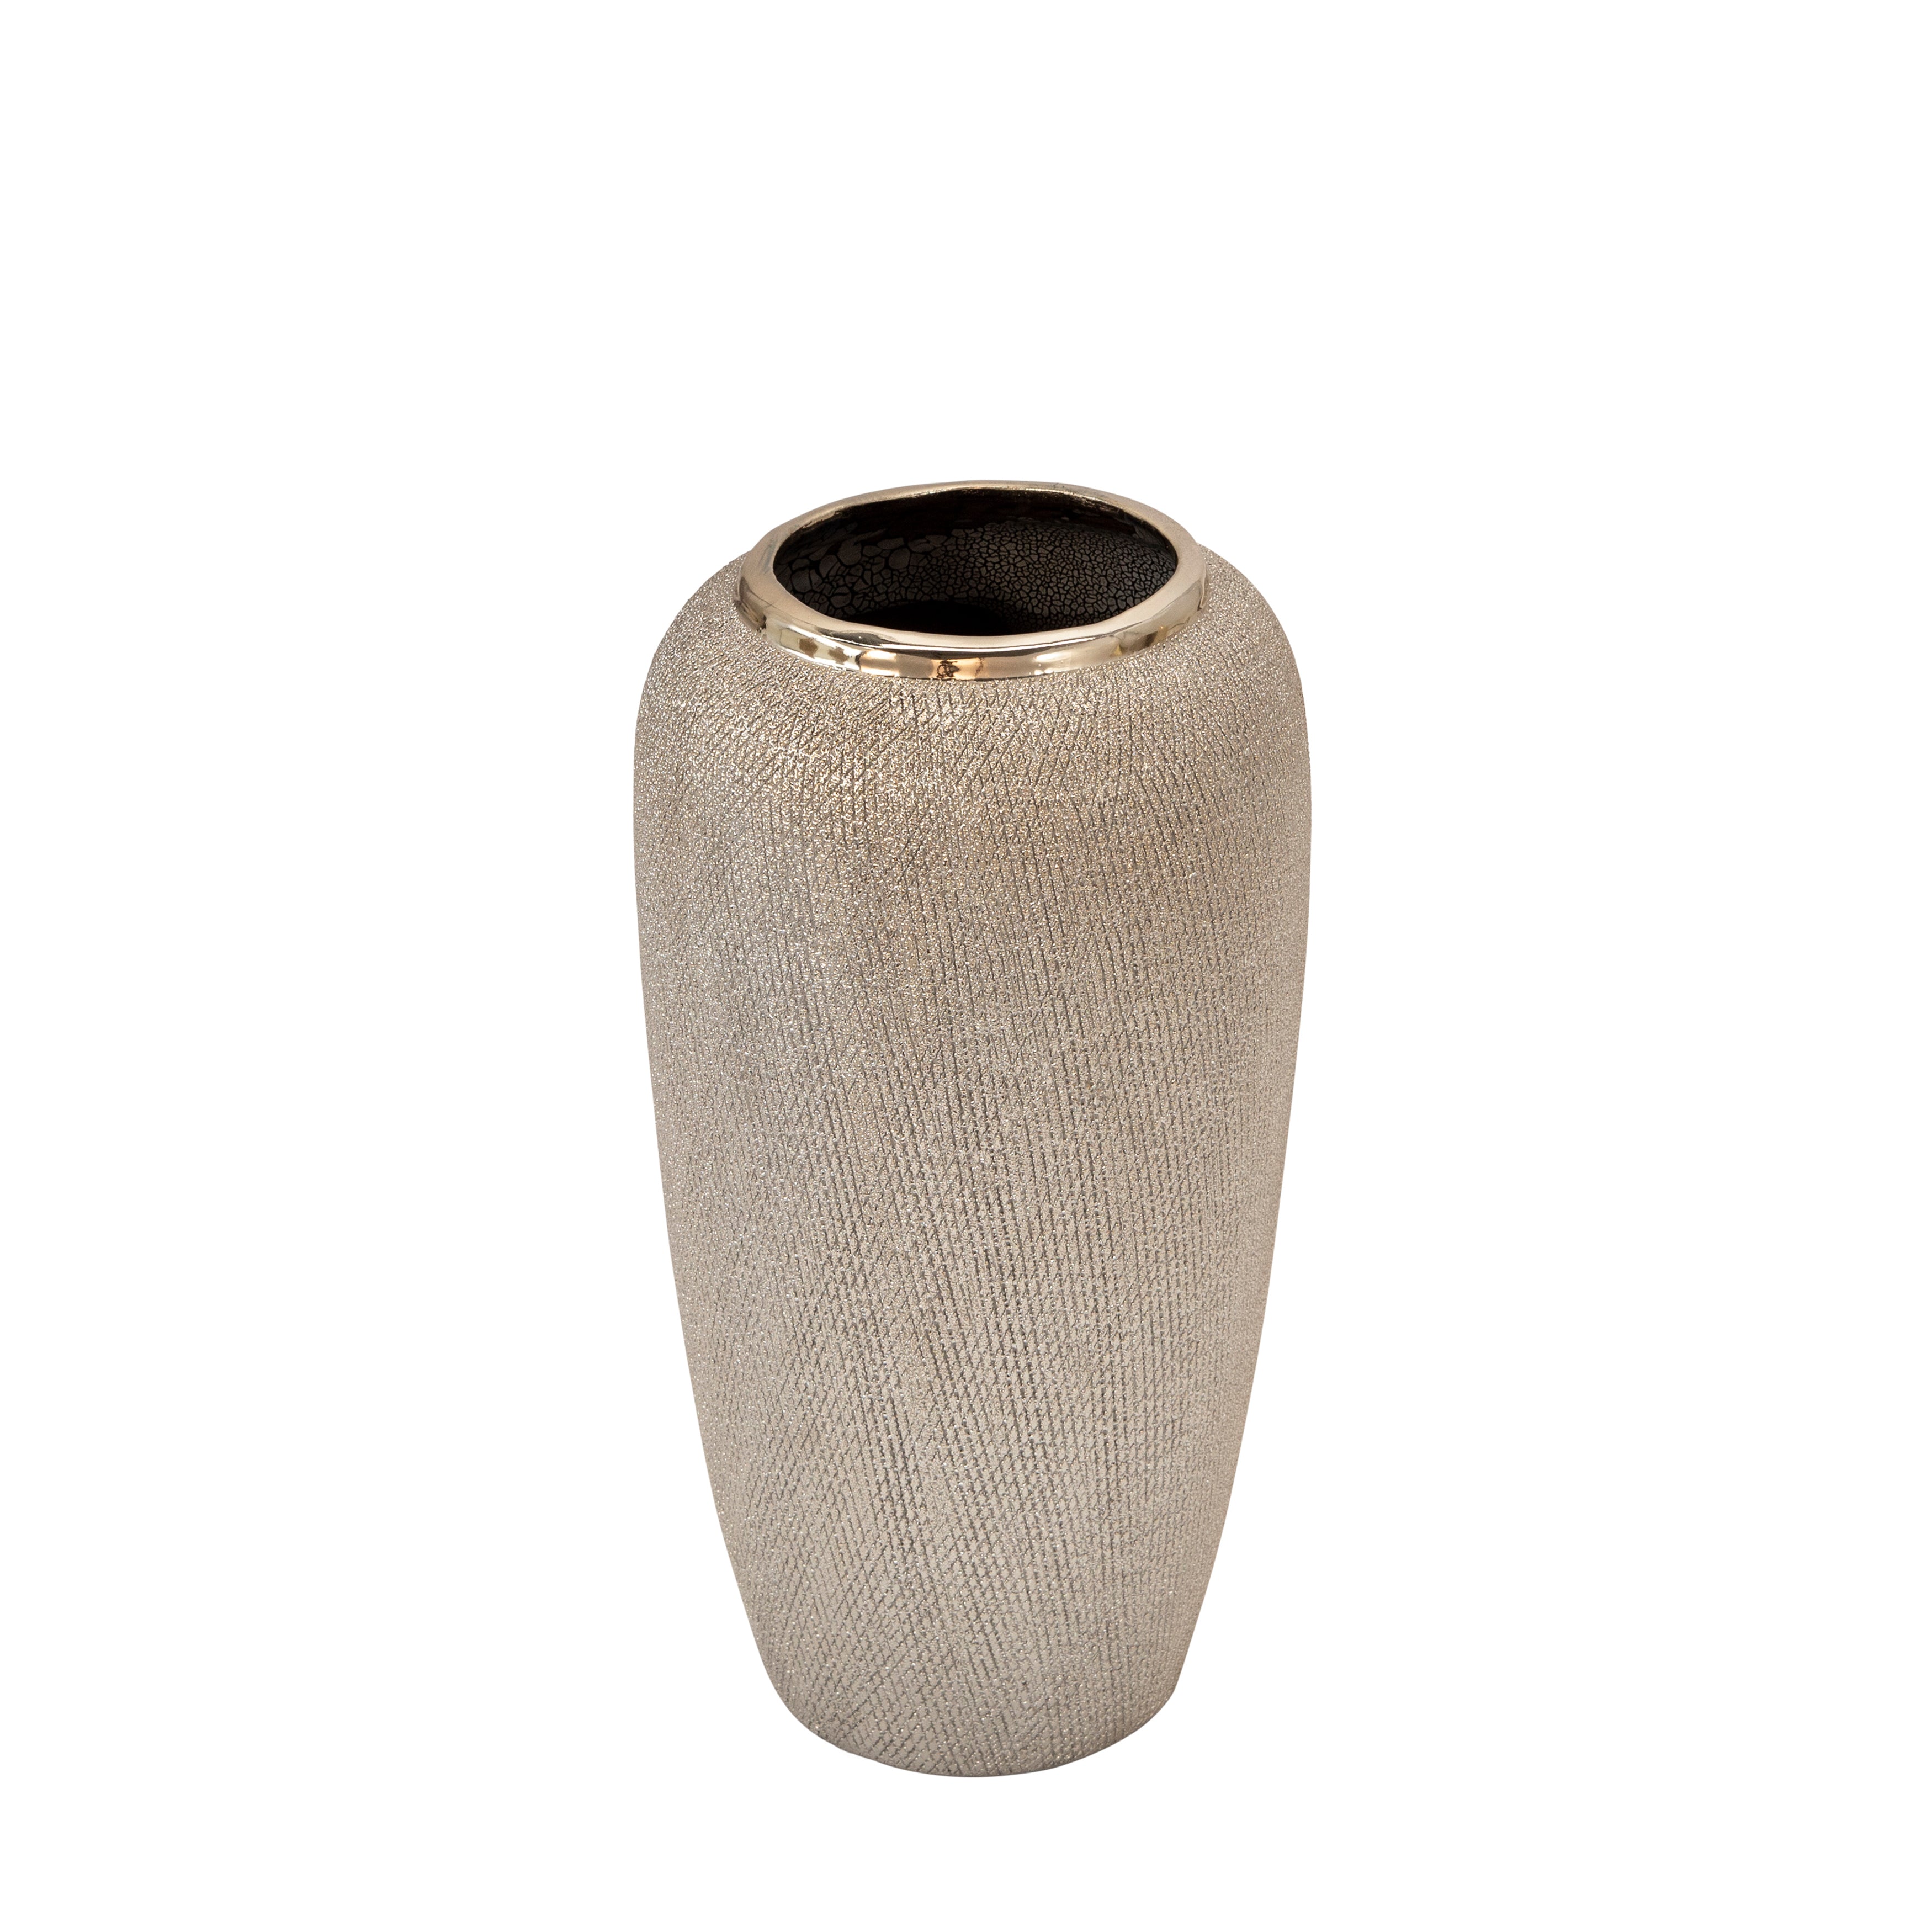 Glitz Ceramic Round Vase - Champagne